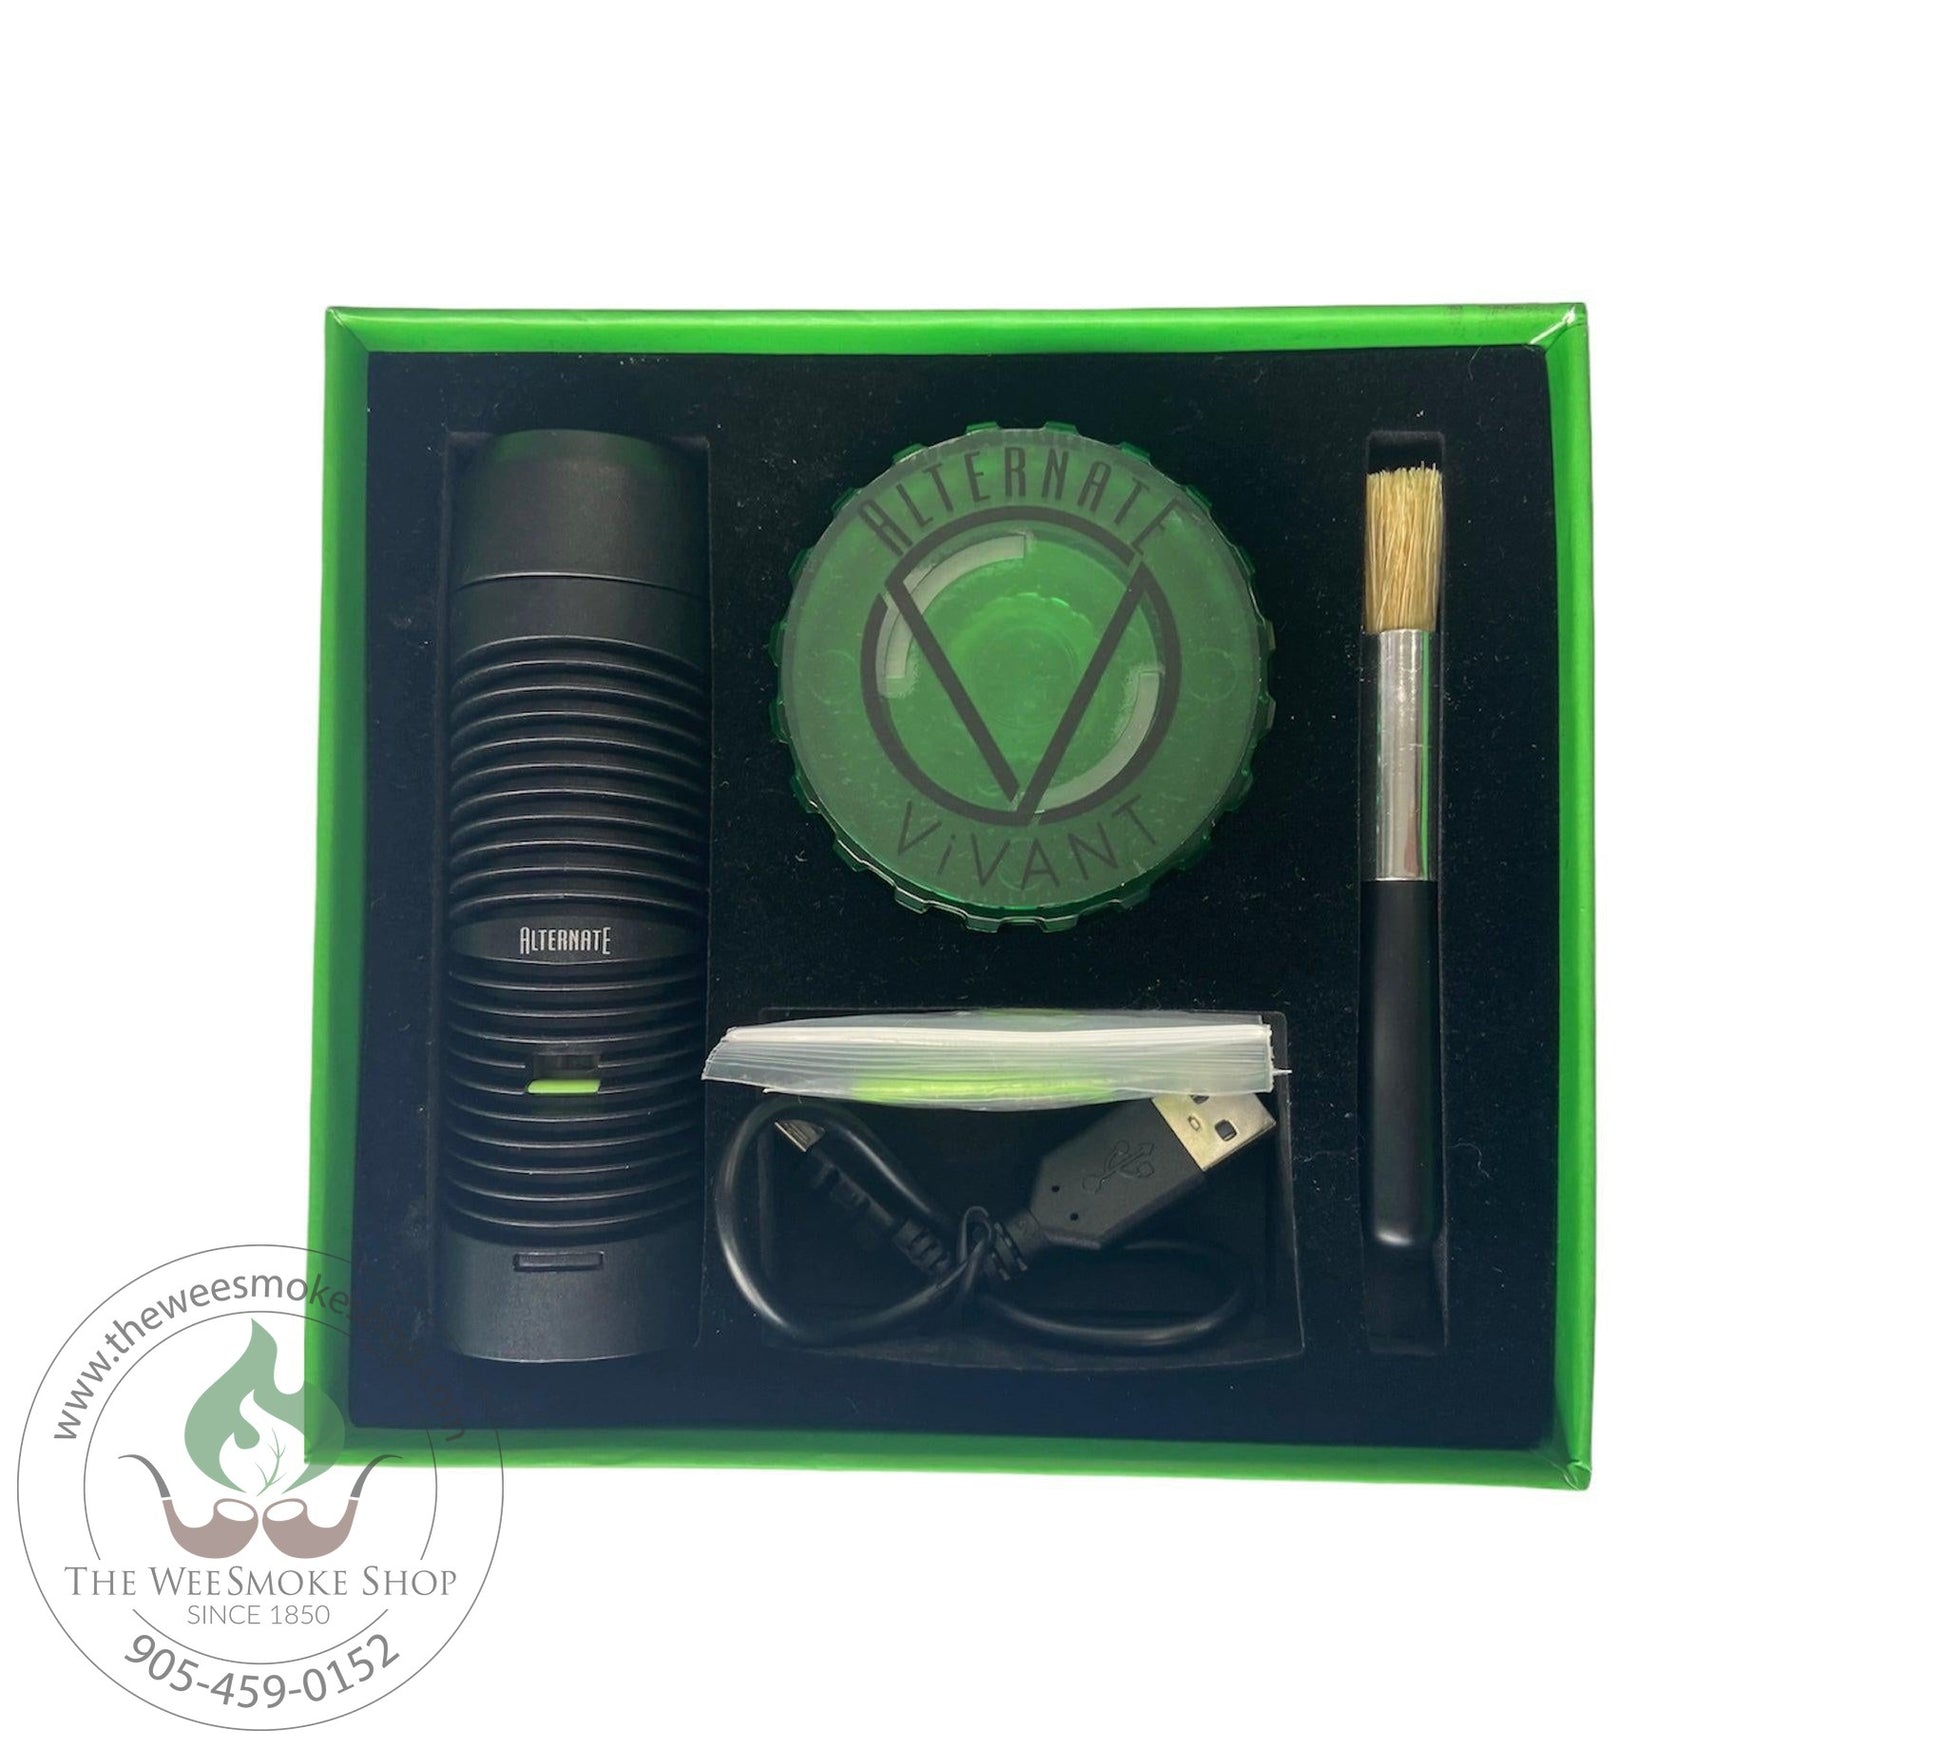 Alternate Vivant Dry Herb AromaTherapy Device Kit - Wee Smoke Shop